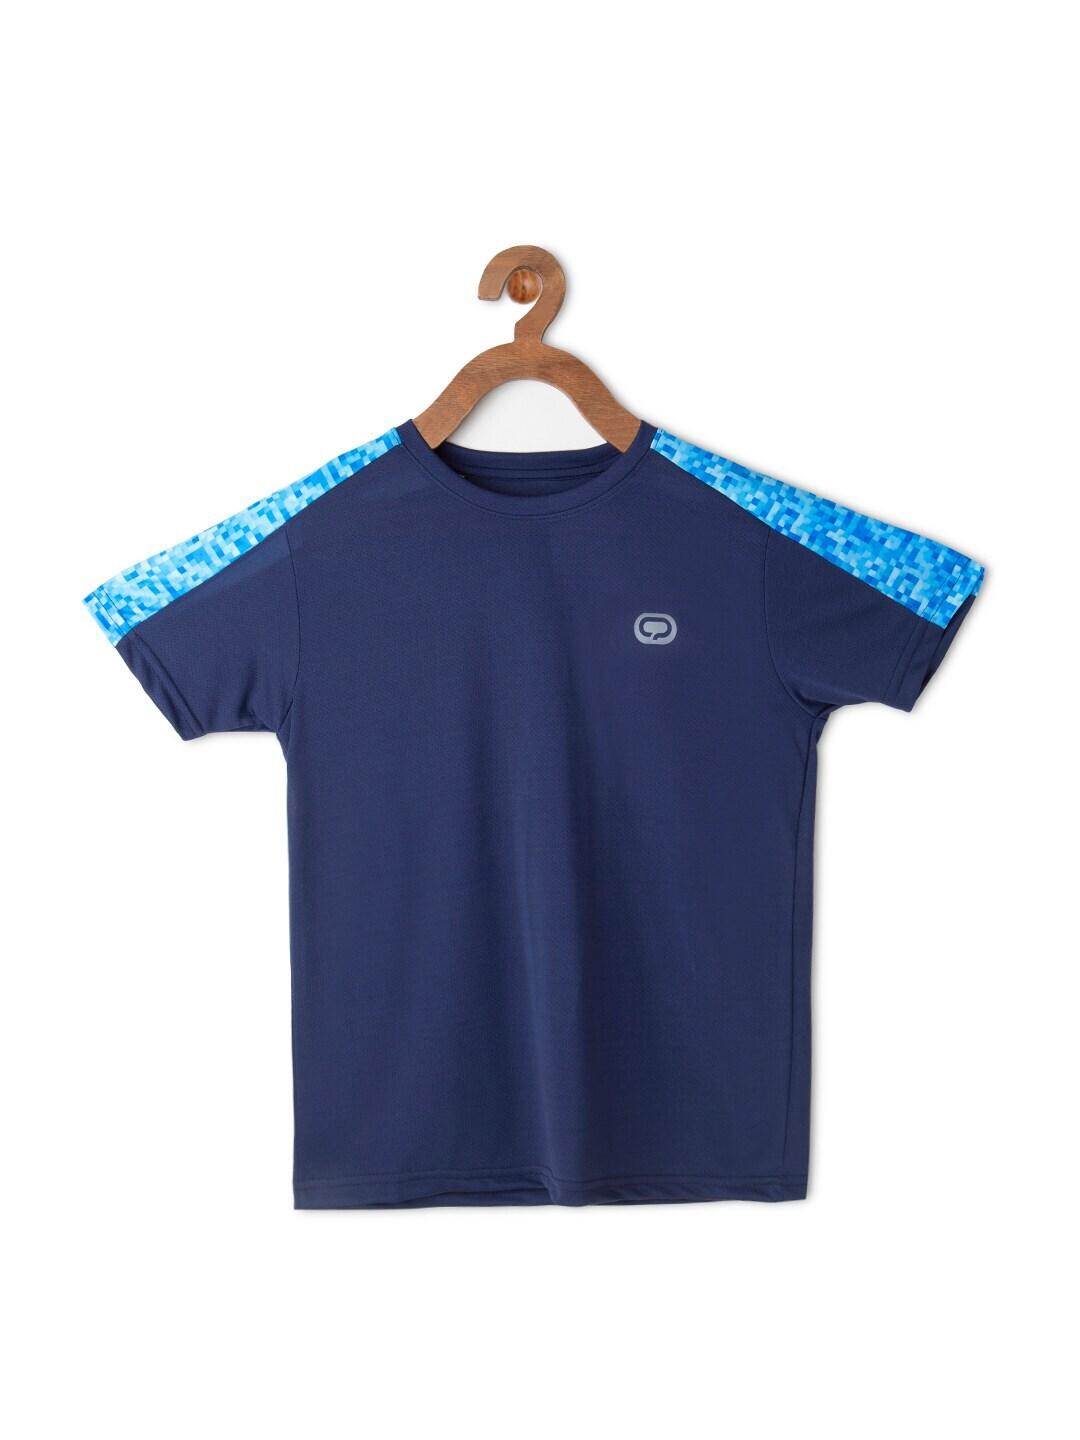 qiddo boys blue printed extended sleeves t-shirt